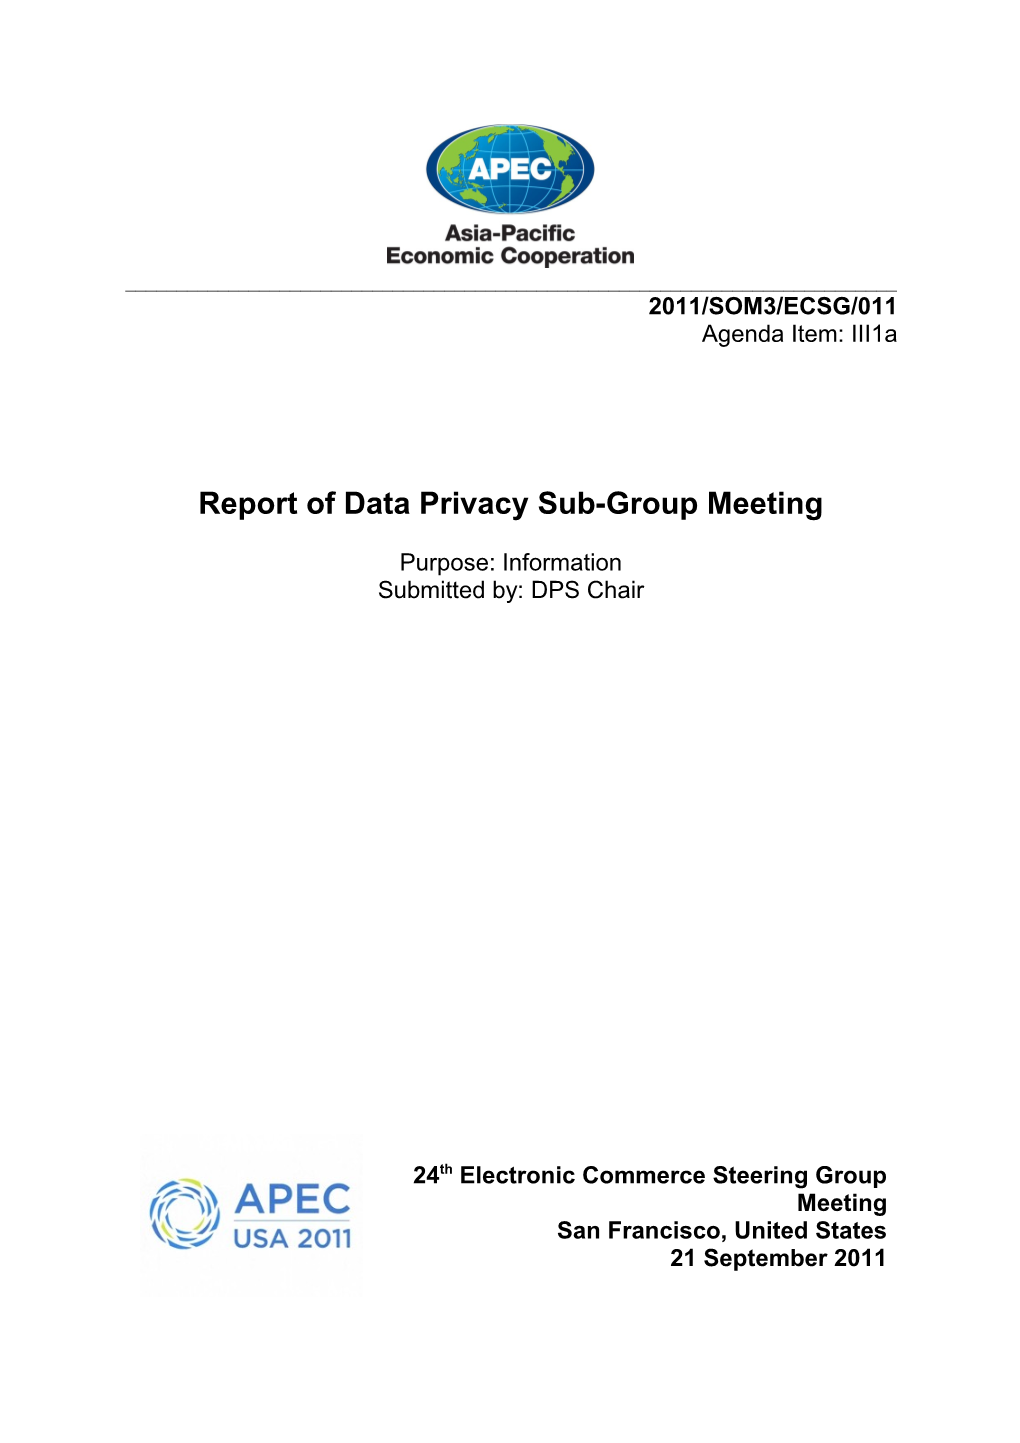 APEC ECSG Data Privacy Sub-Group